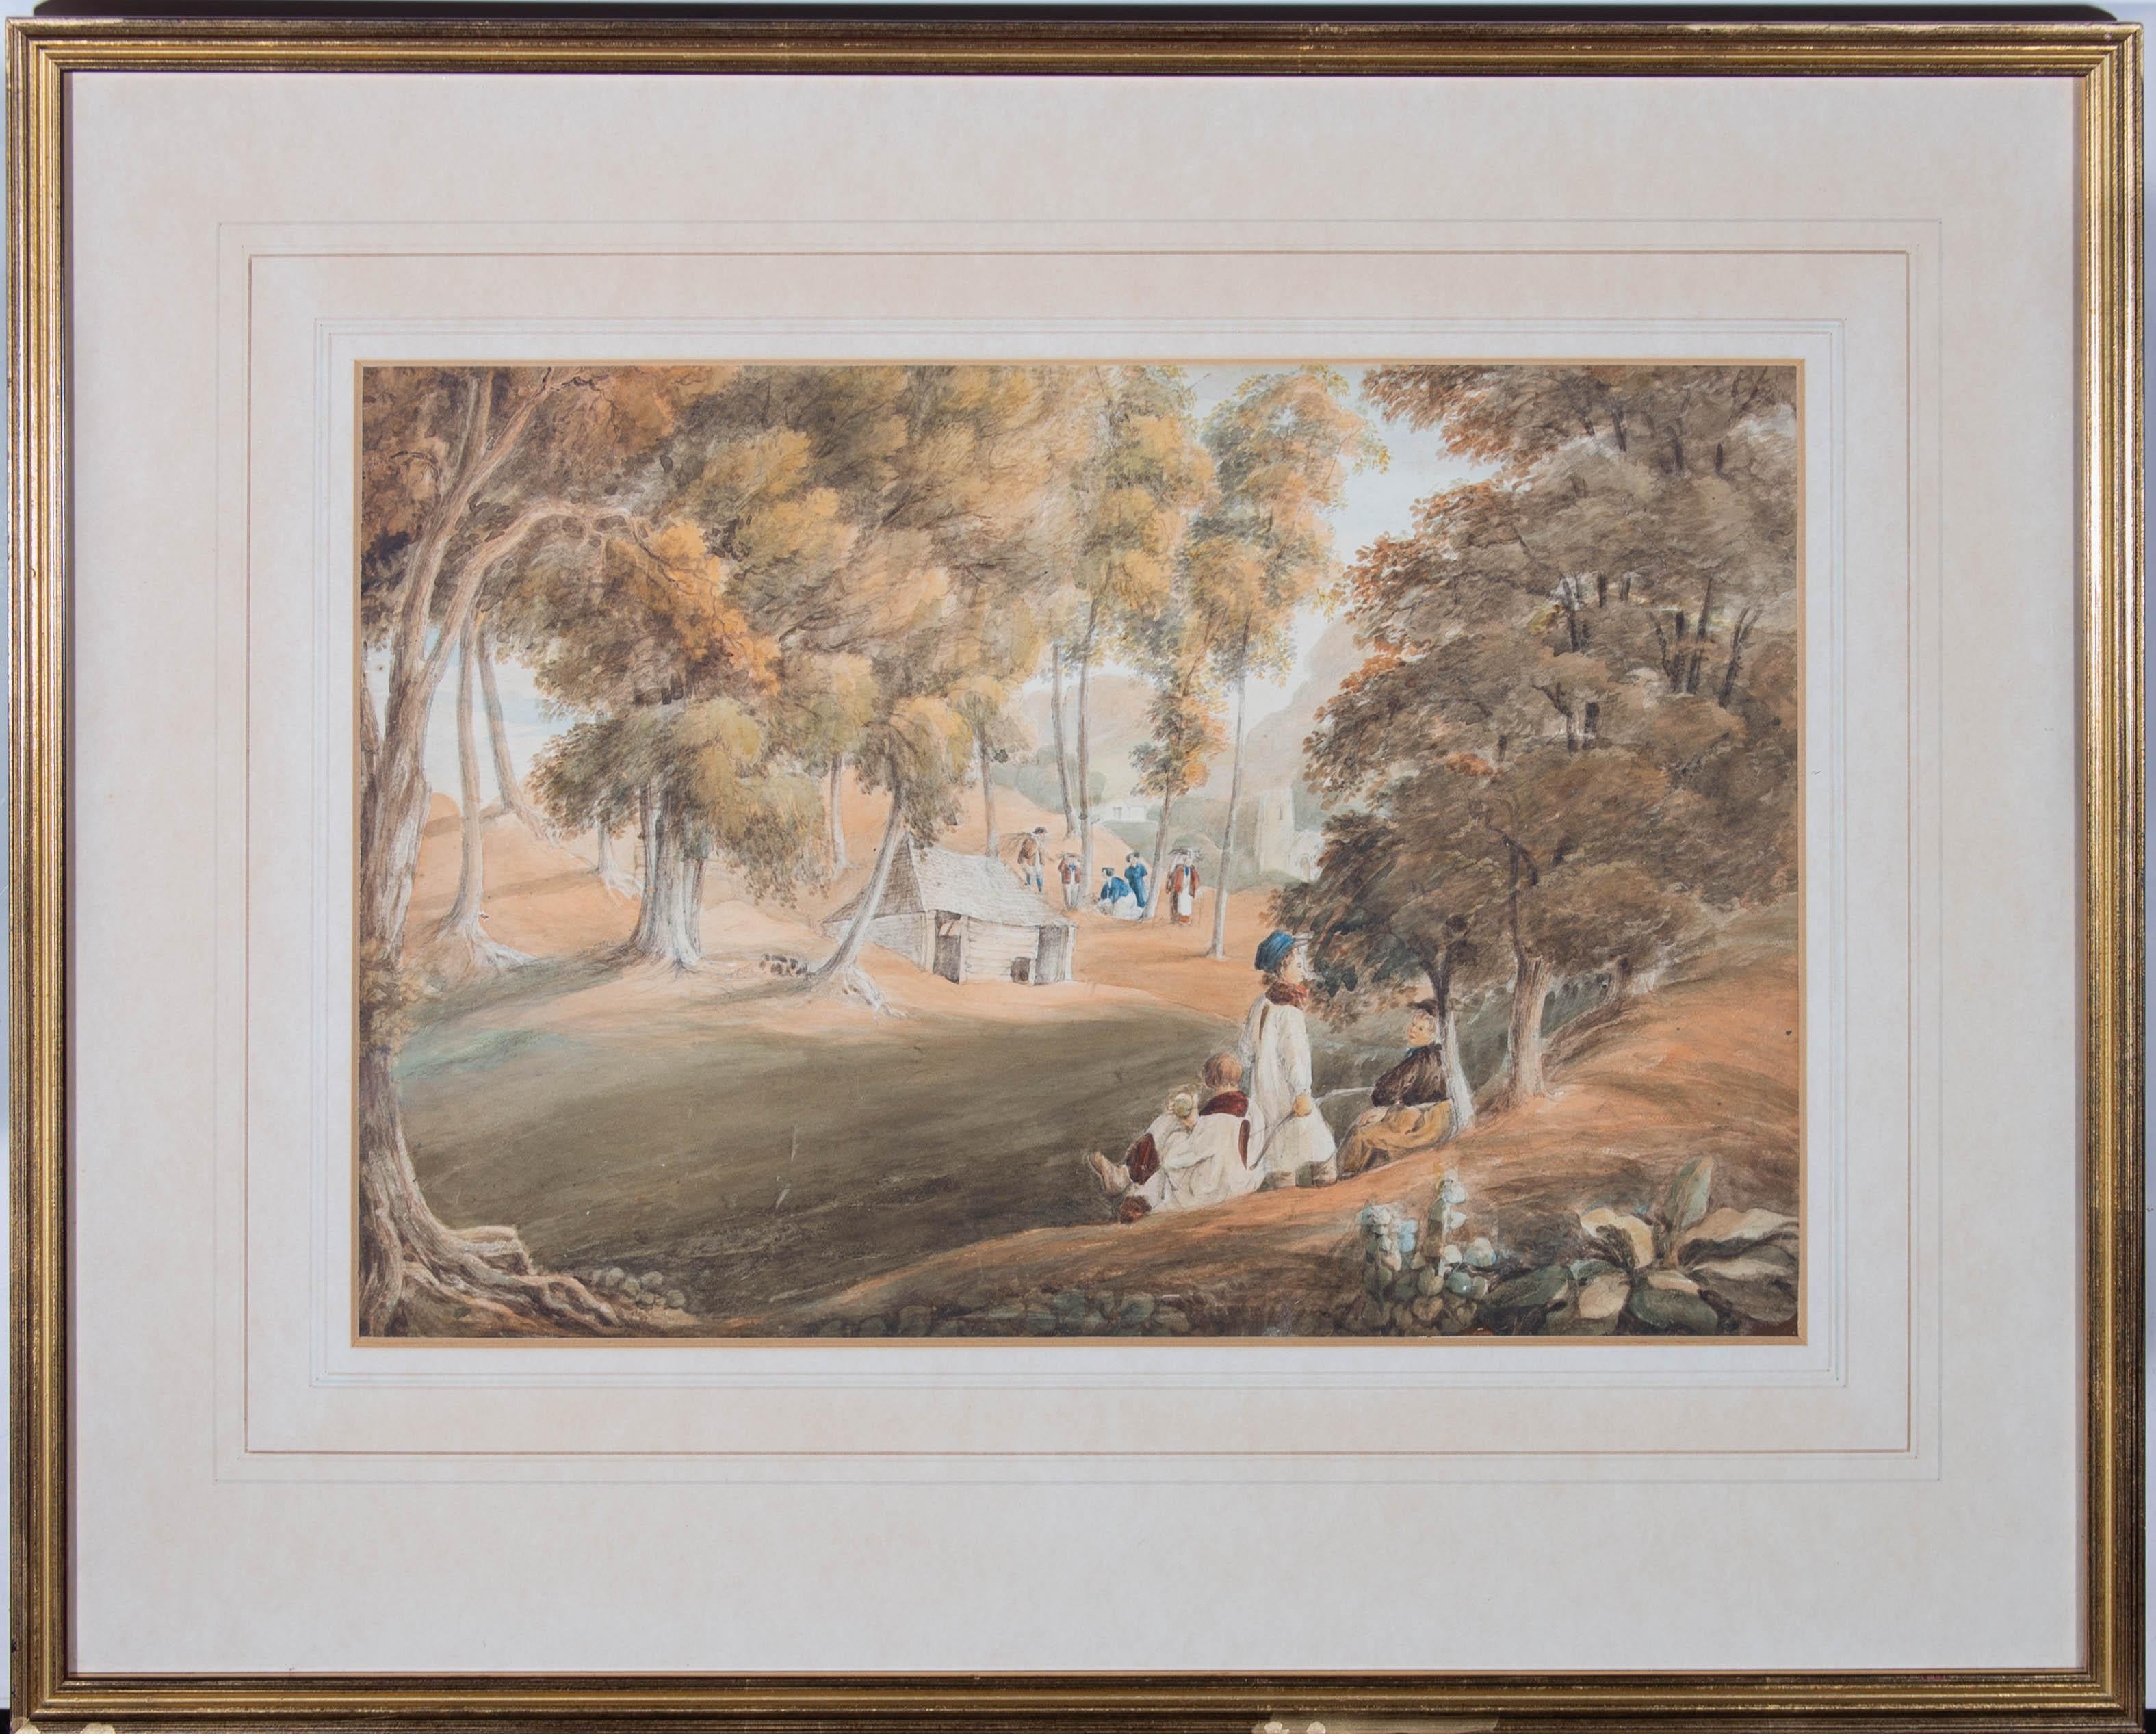 Unknown Landscape Art - 19th Century Watercolour - Outdoor Activities